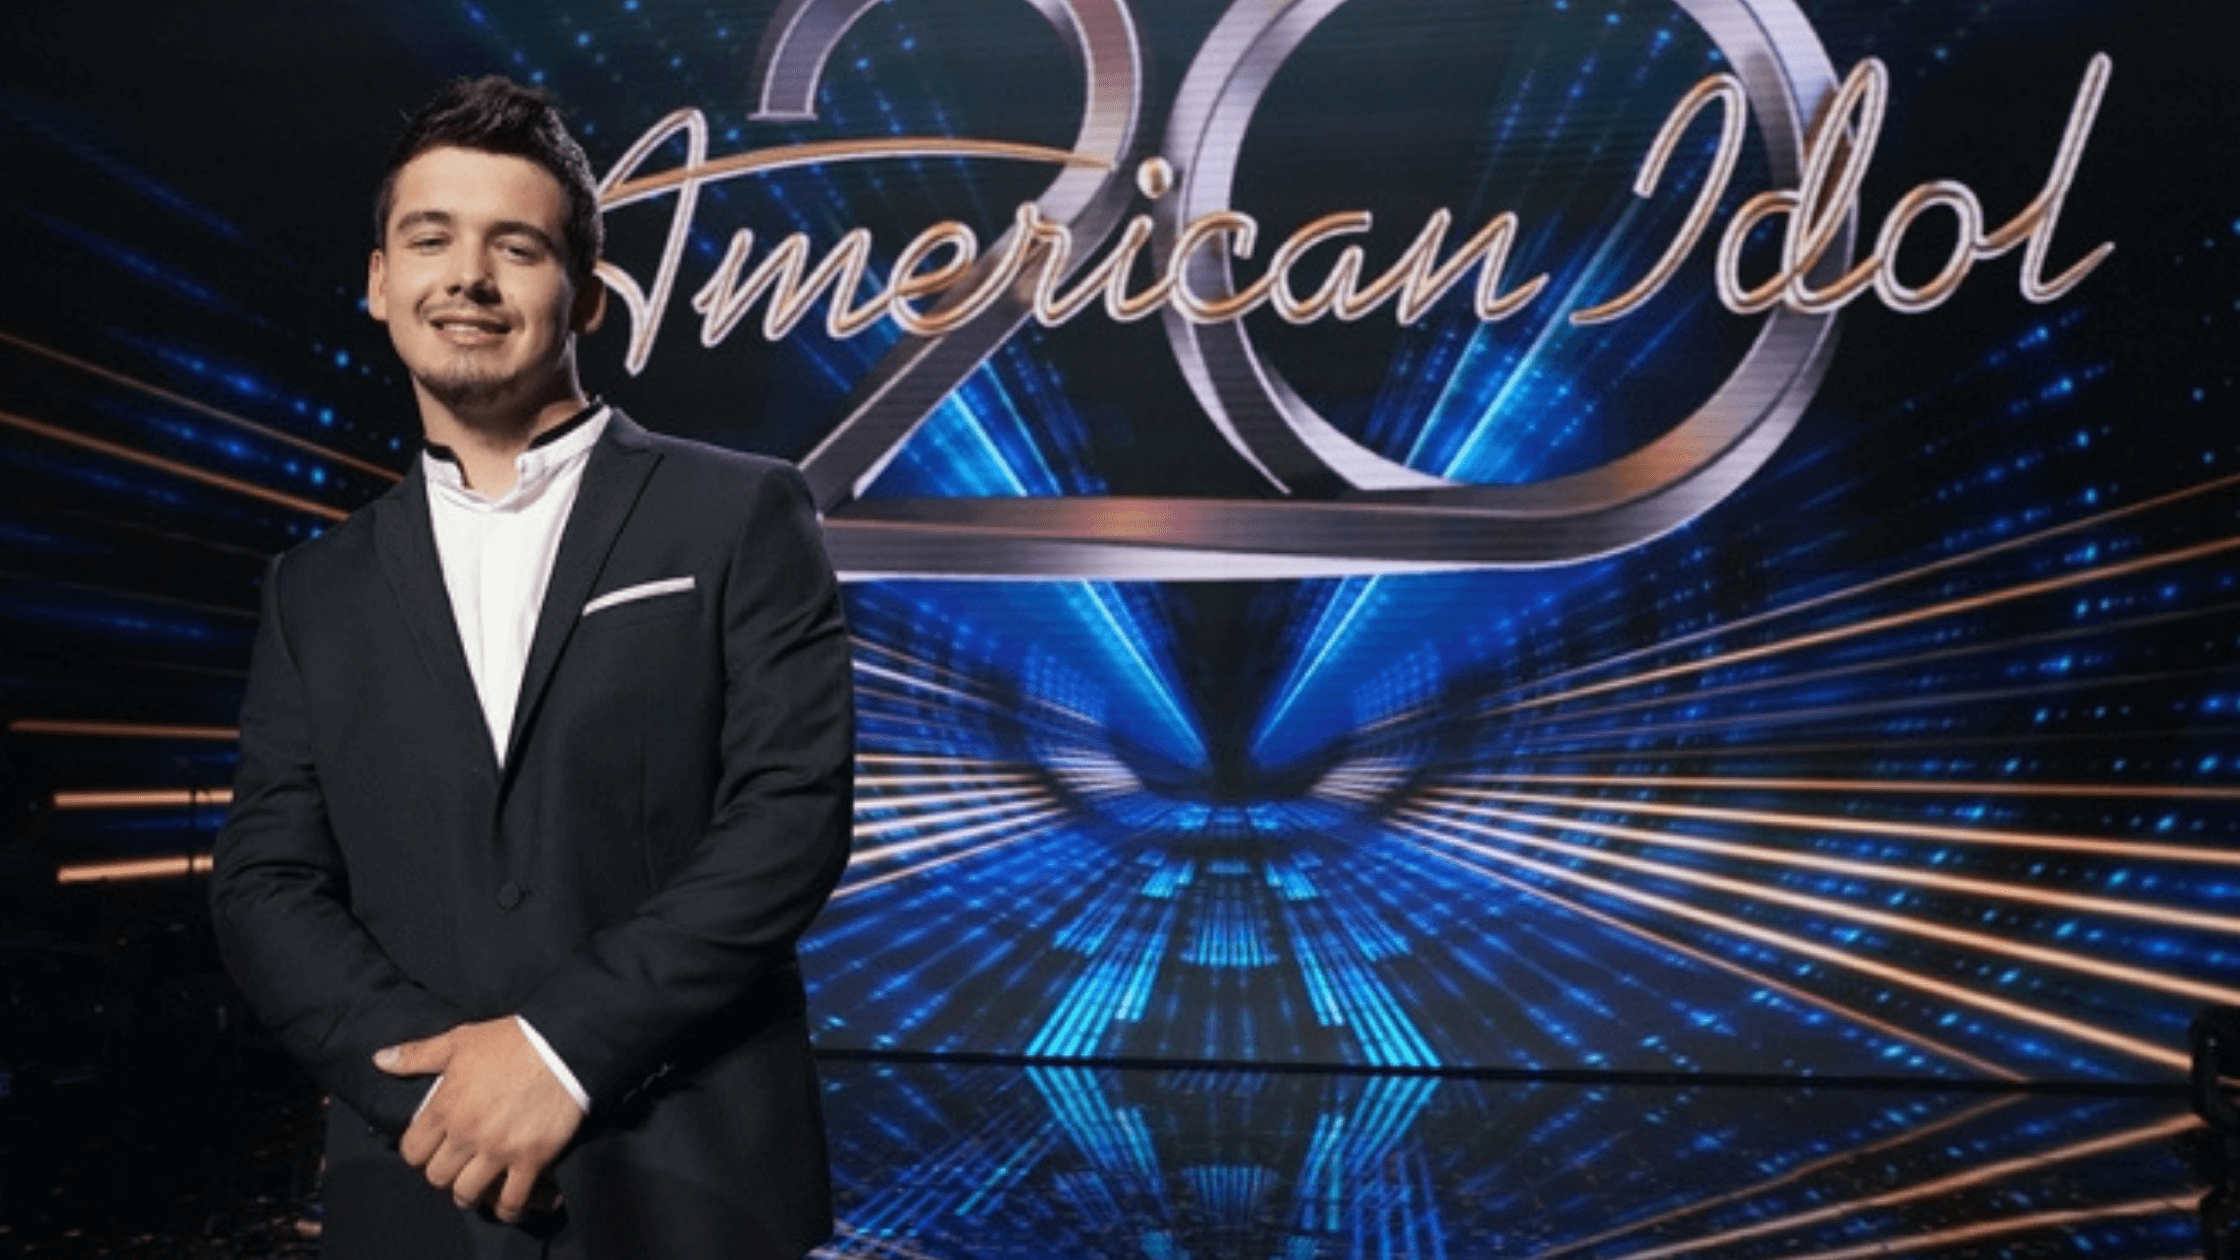 Did voters pick the proper winner for 'American Idol' 2022